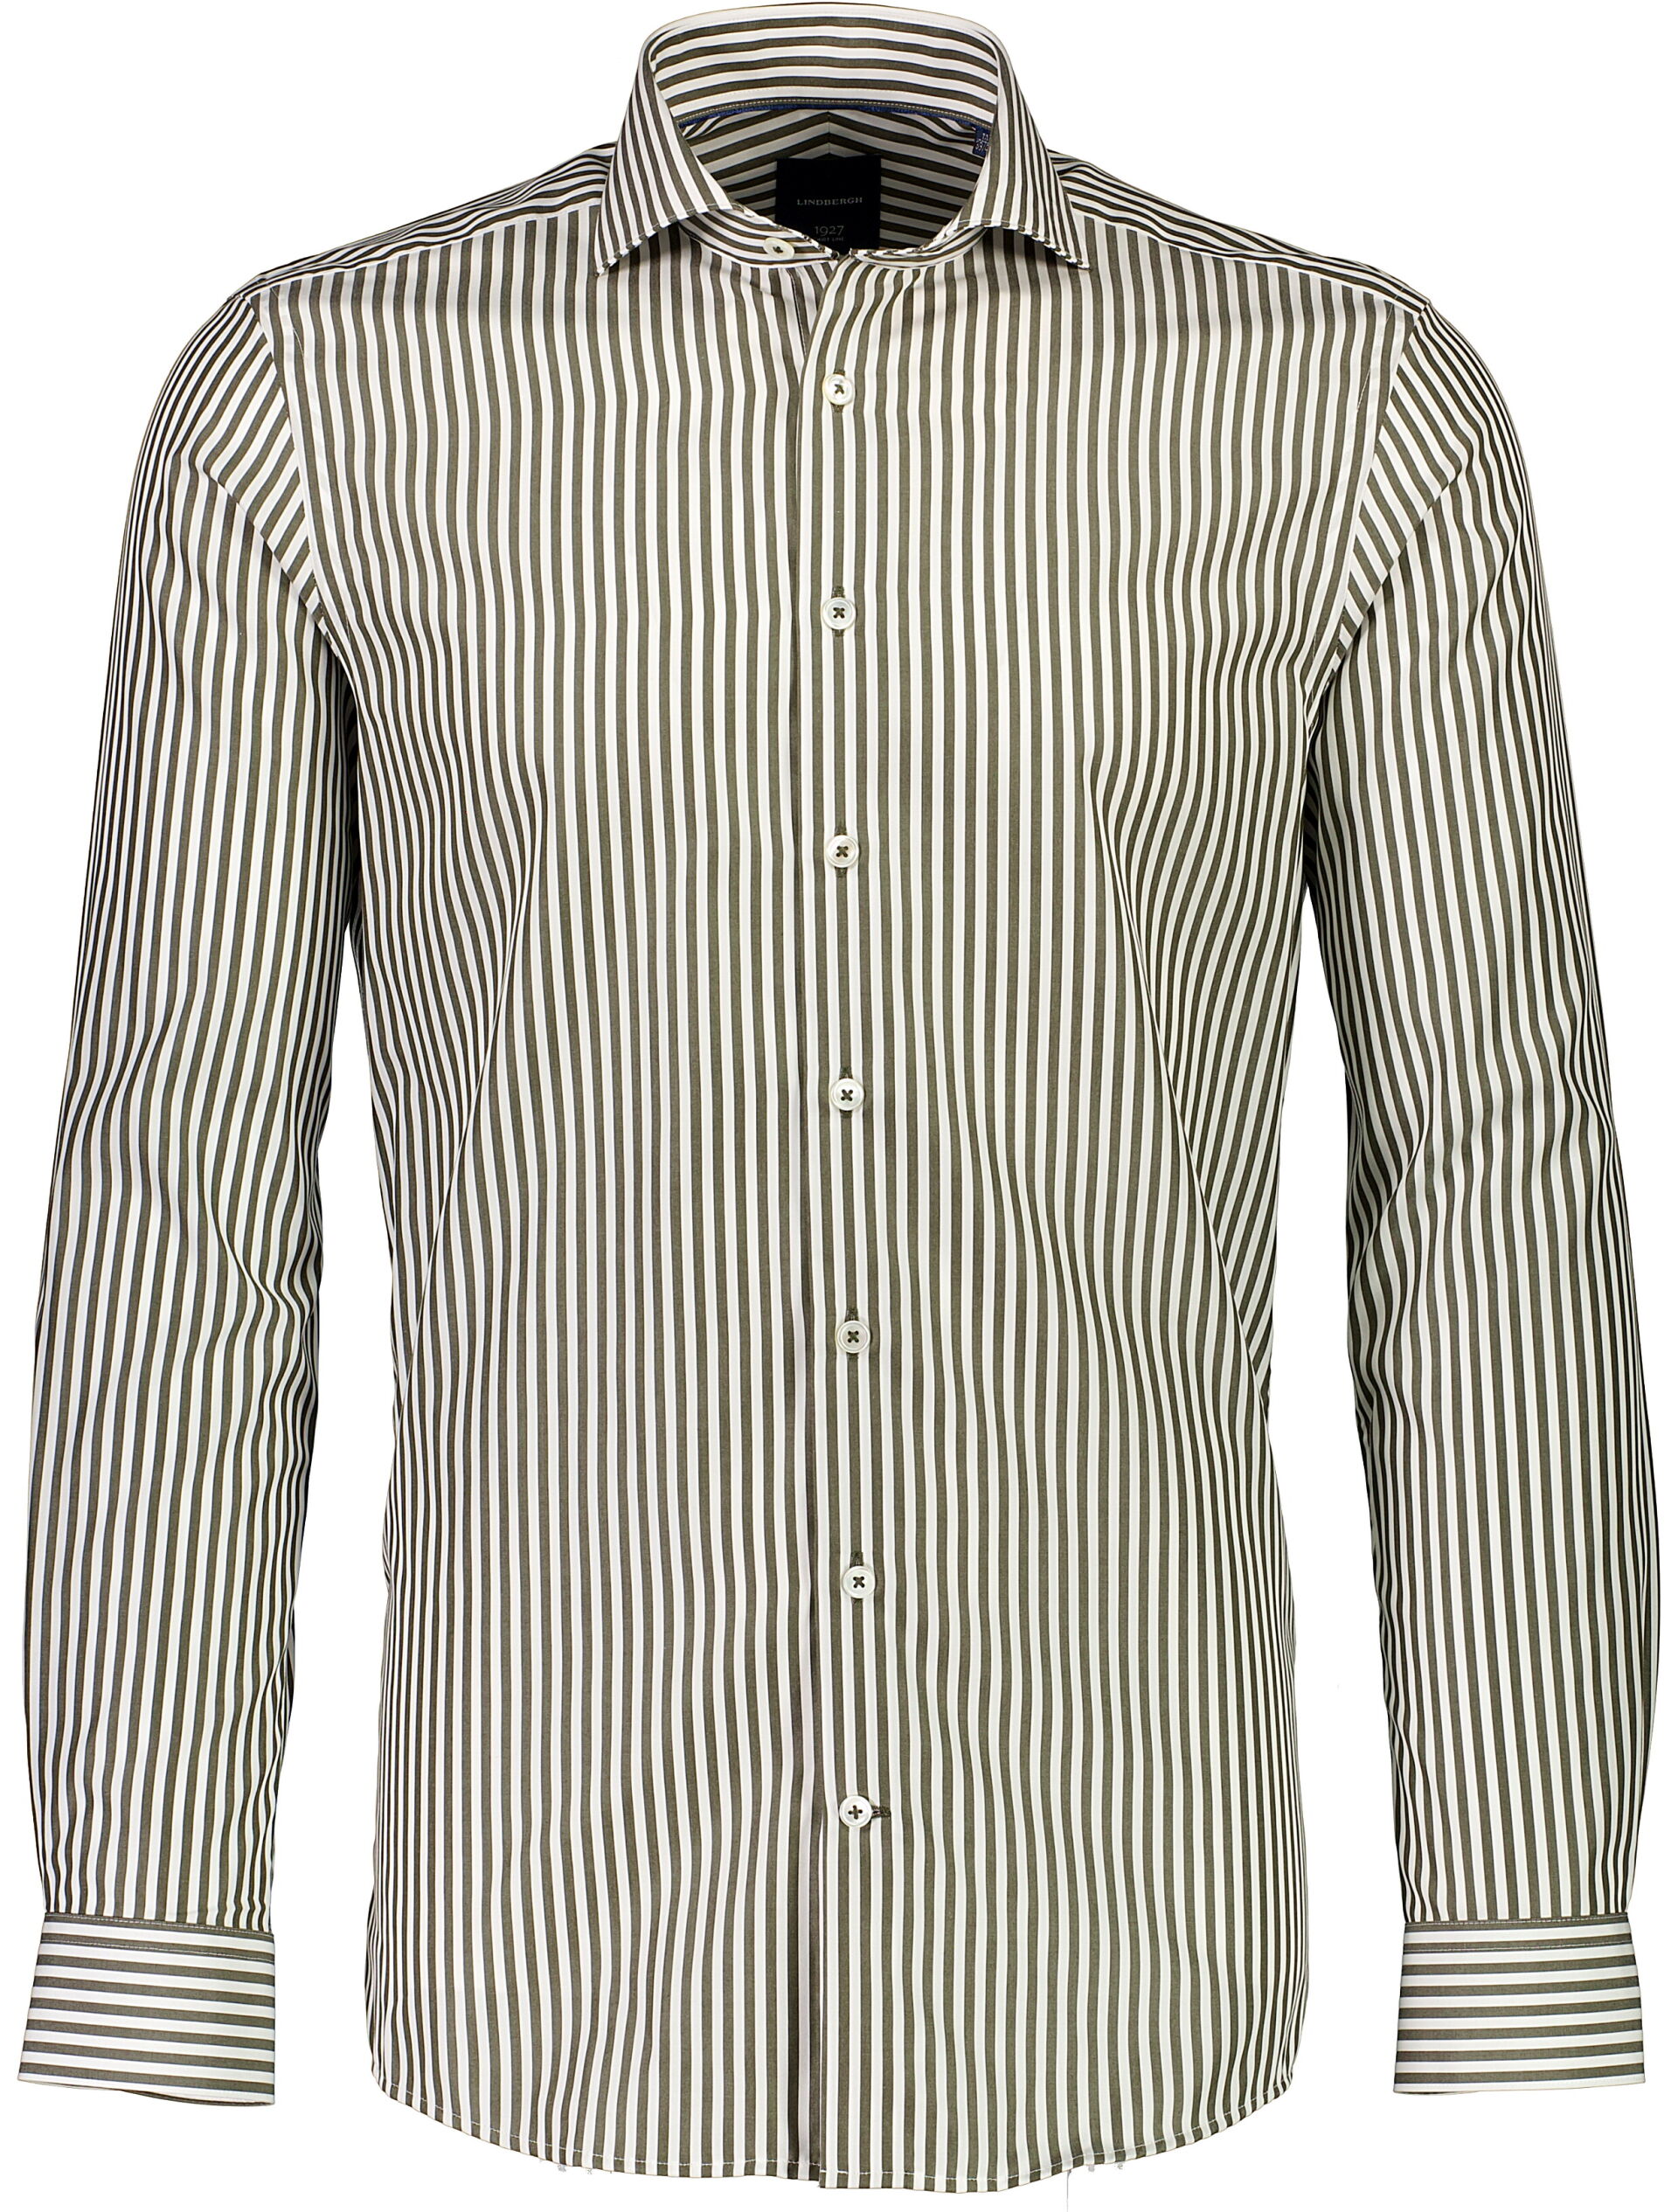 1927 Business casual shirt 30-247142